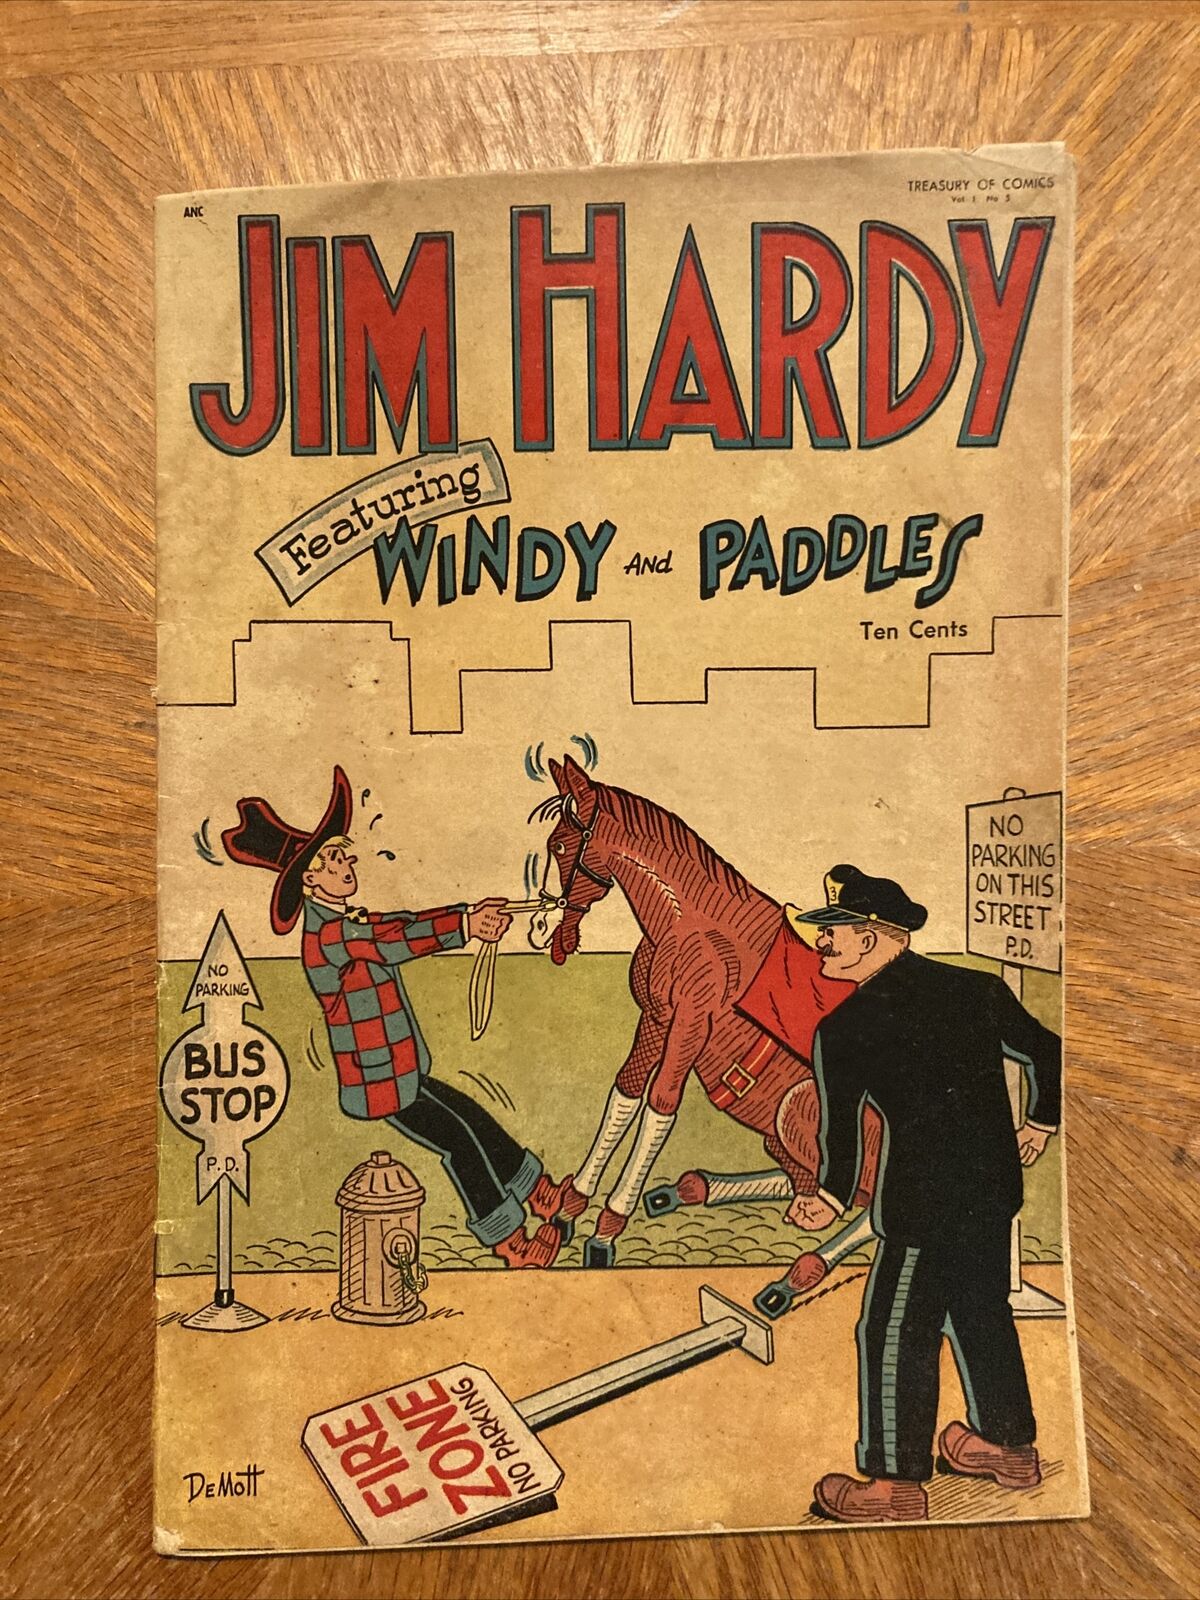 Jim Hardy Treasury of Comics Vol 1 #5 1948